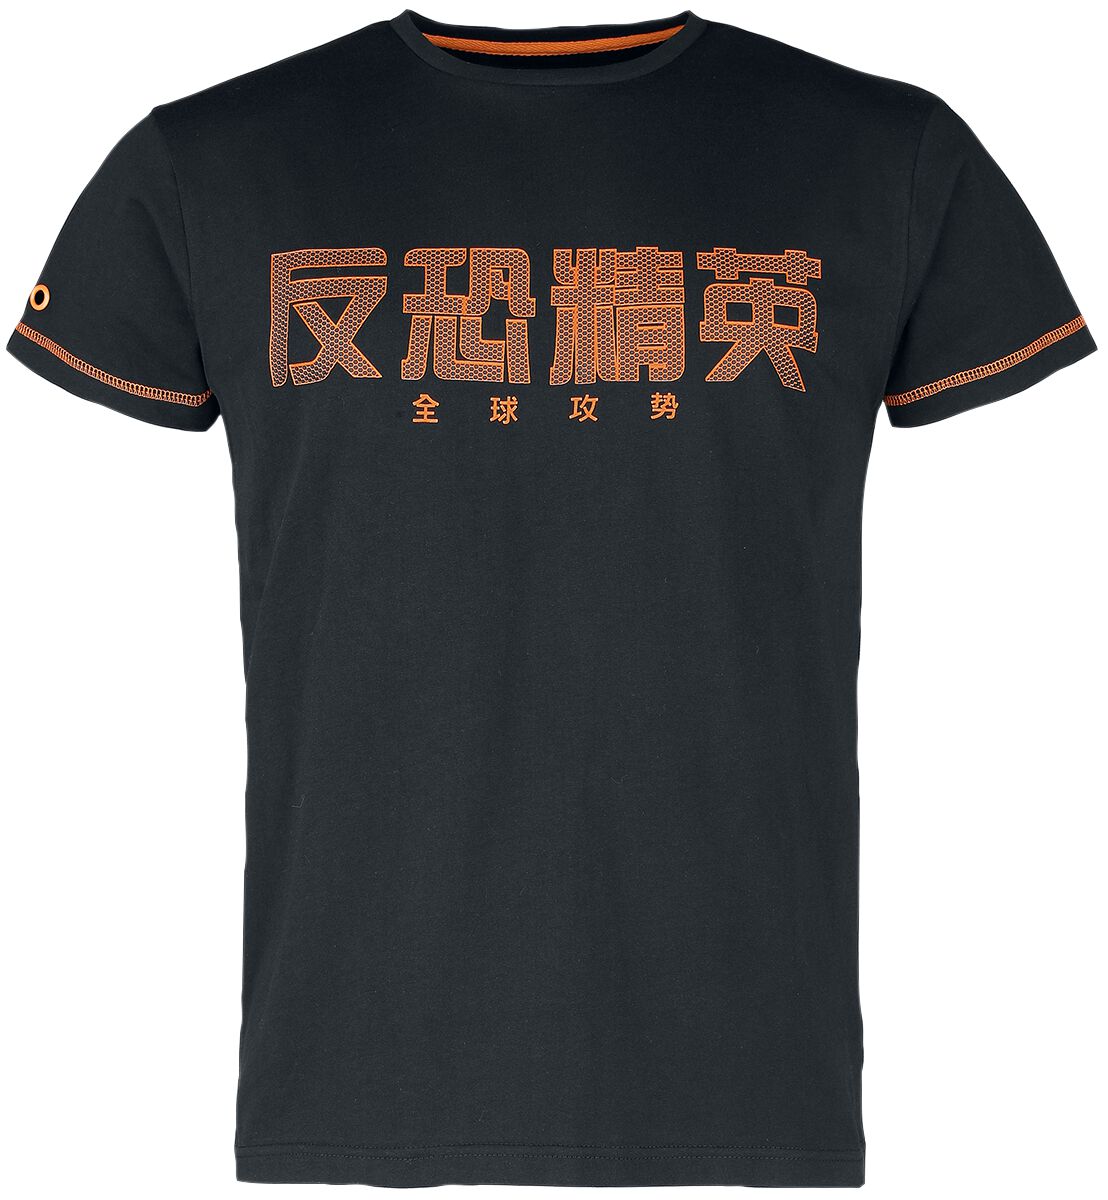 Counter-Strike Global Offensive - CS:GO T-Shirt black